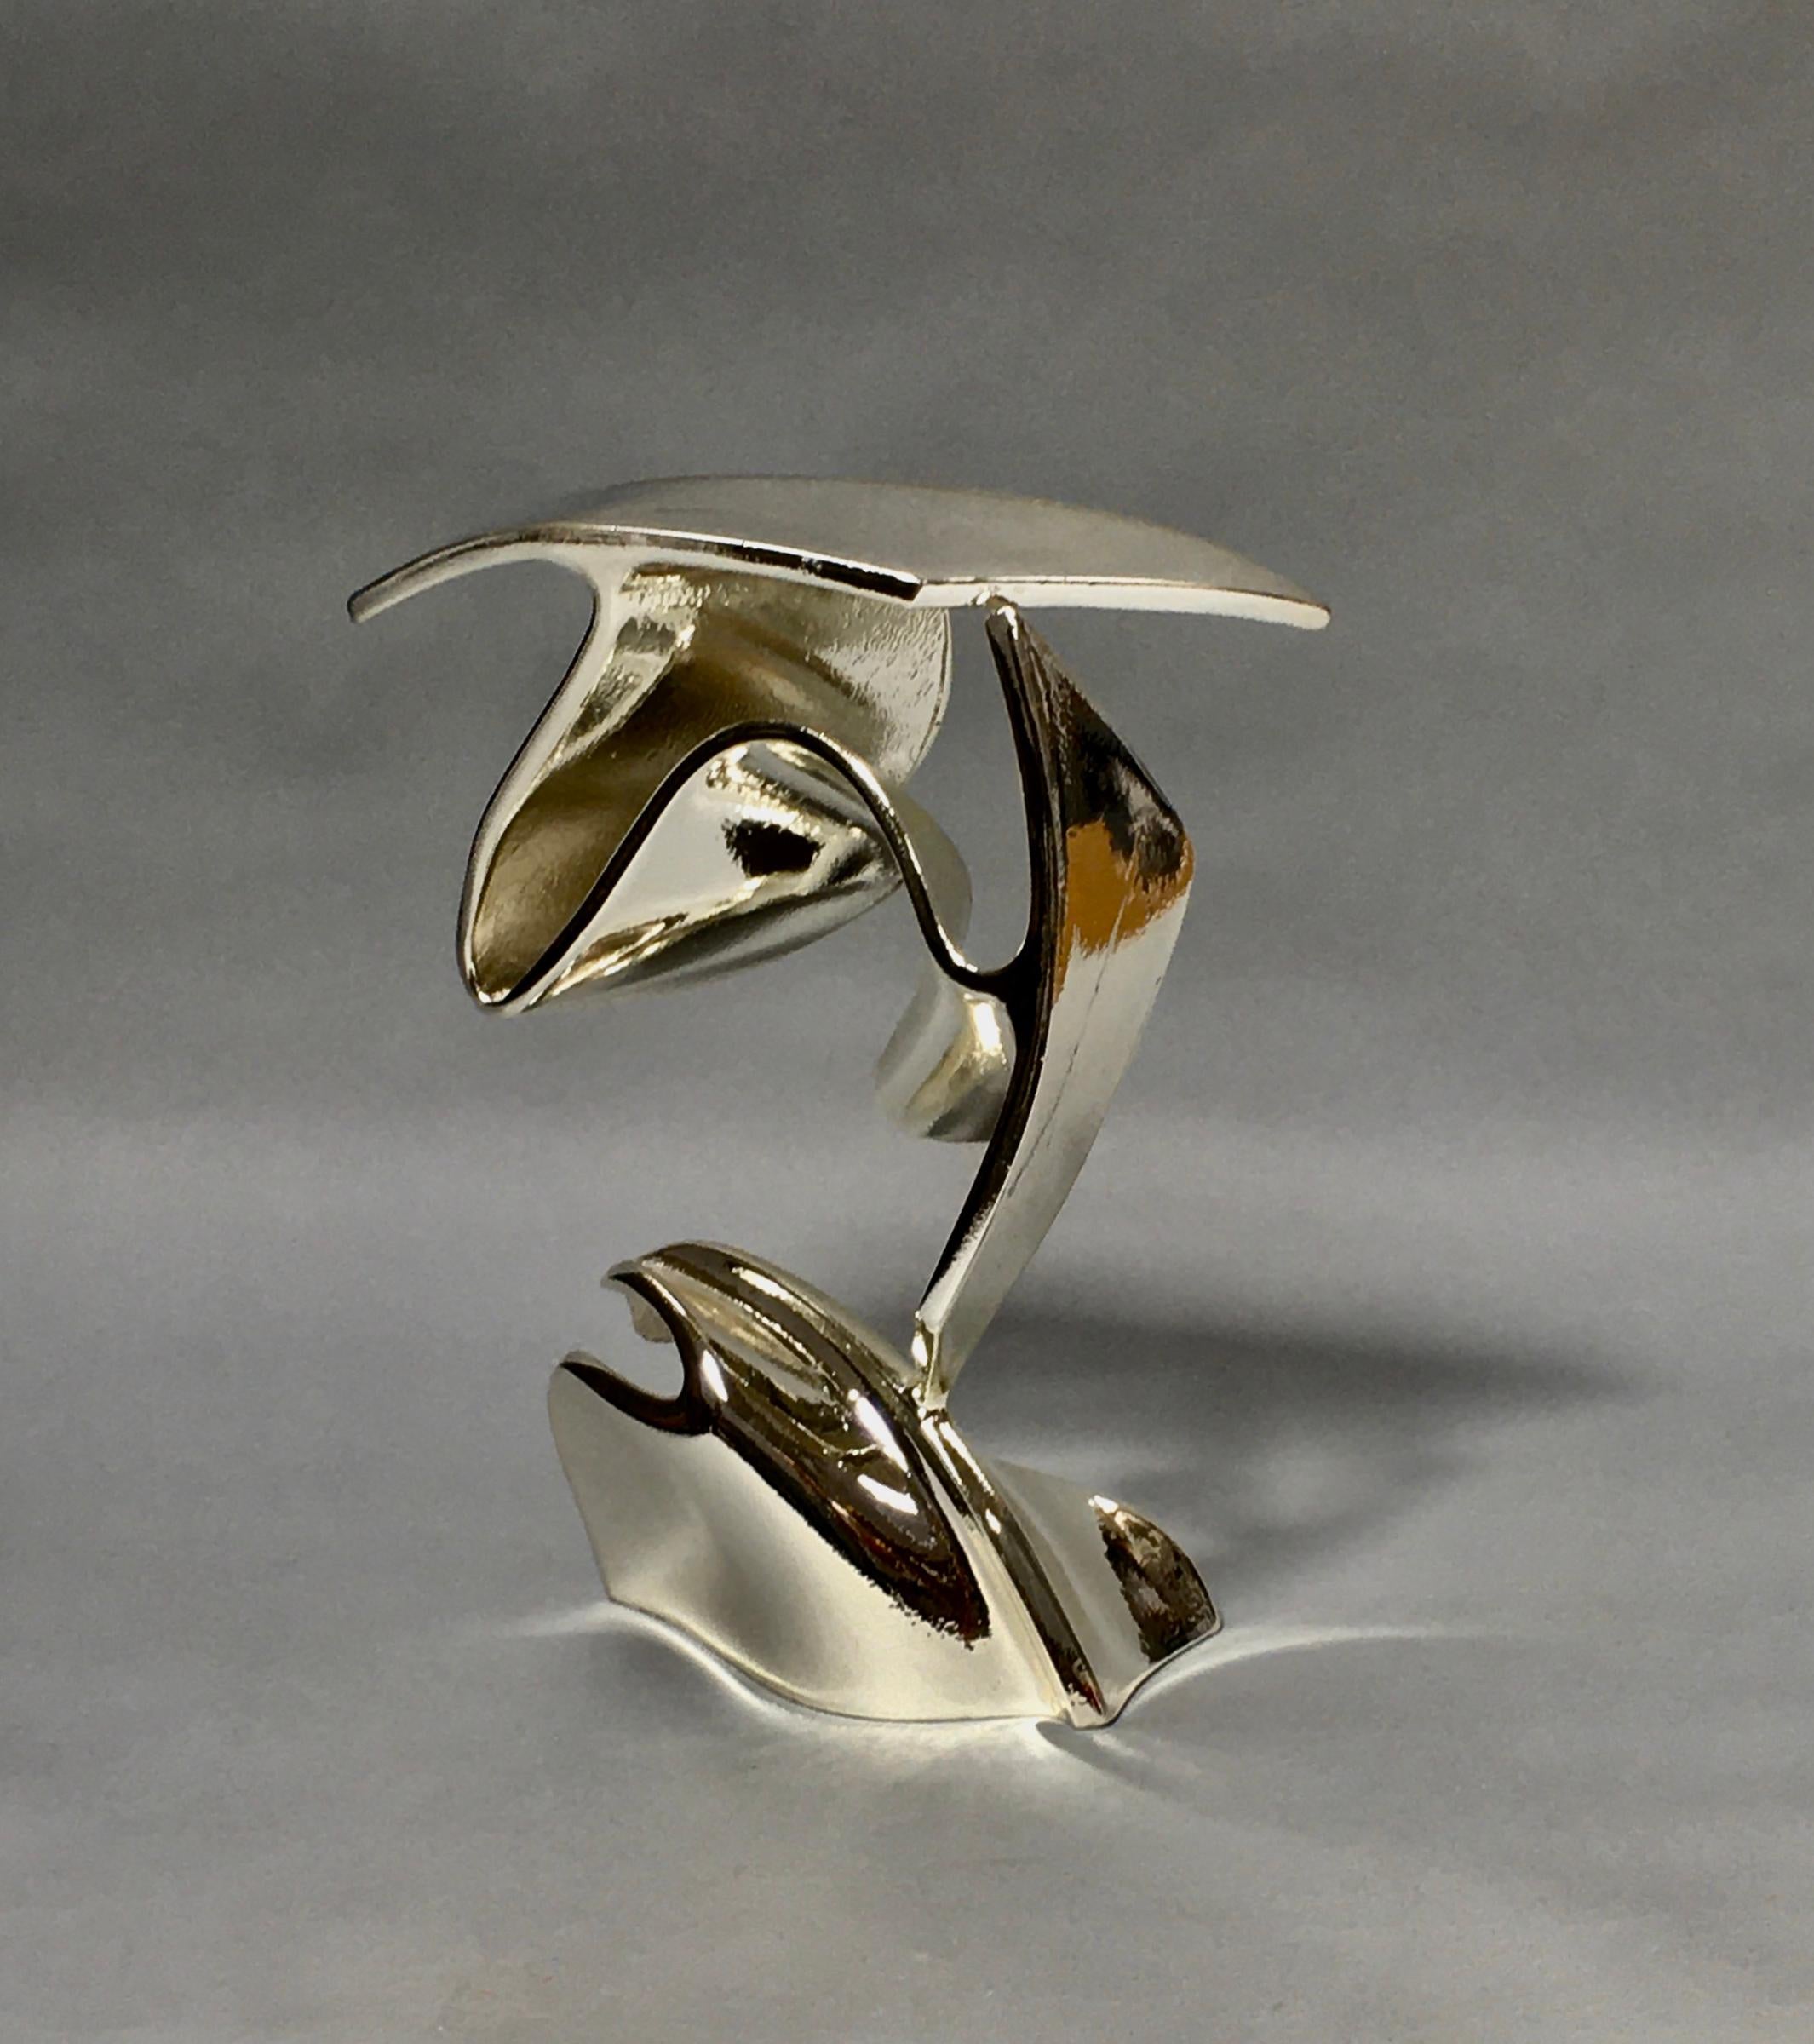 Bret Price Abstract Sculpture - Silver Streak